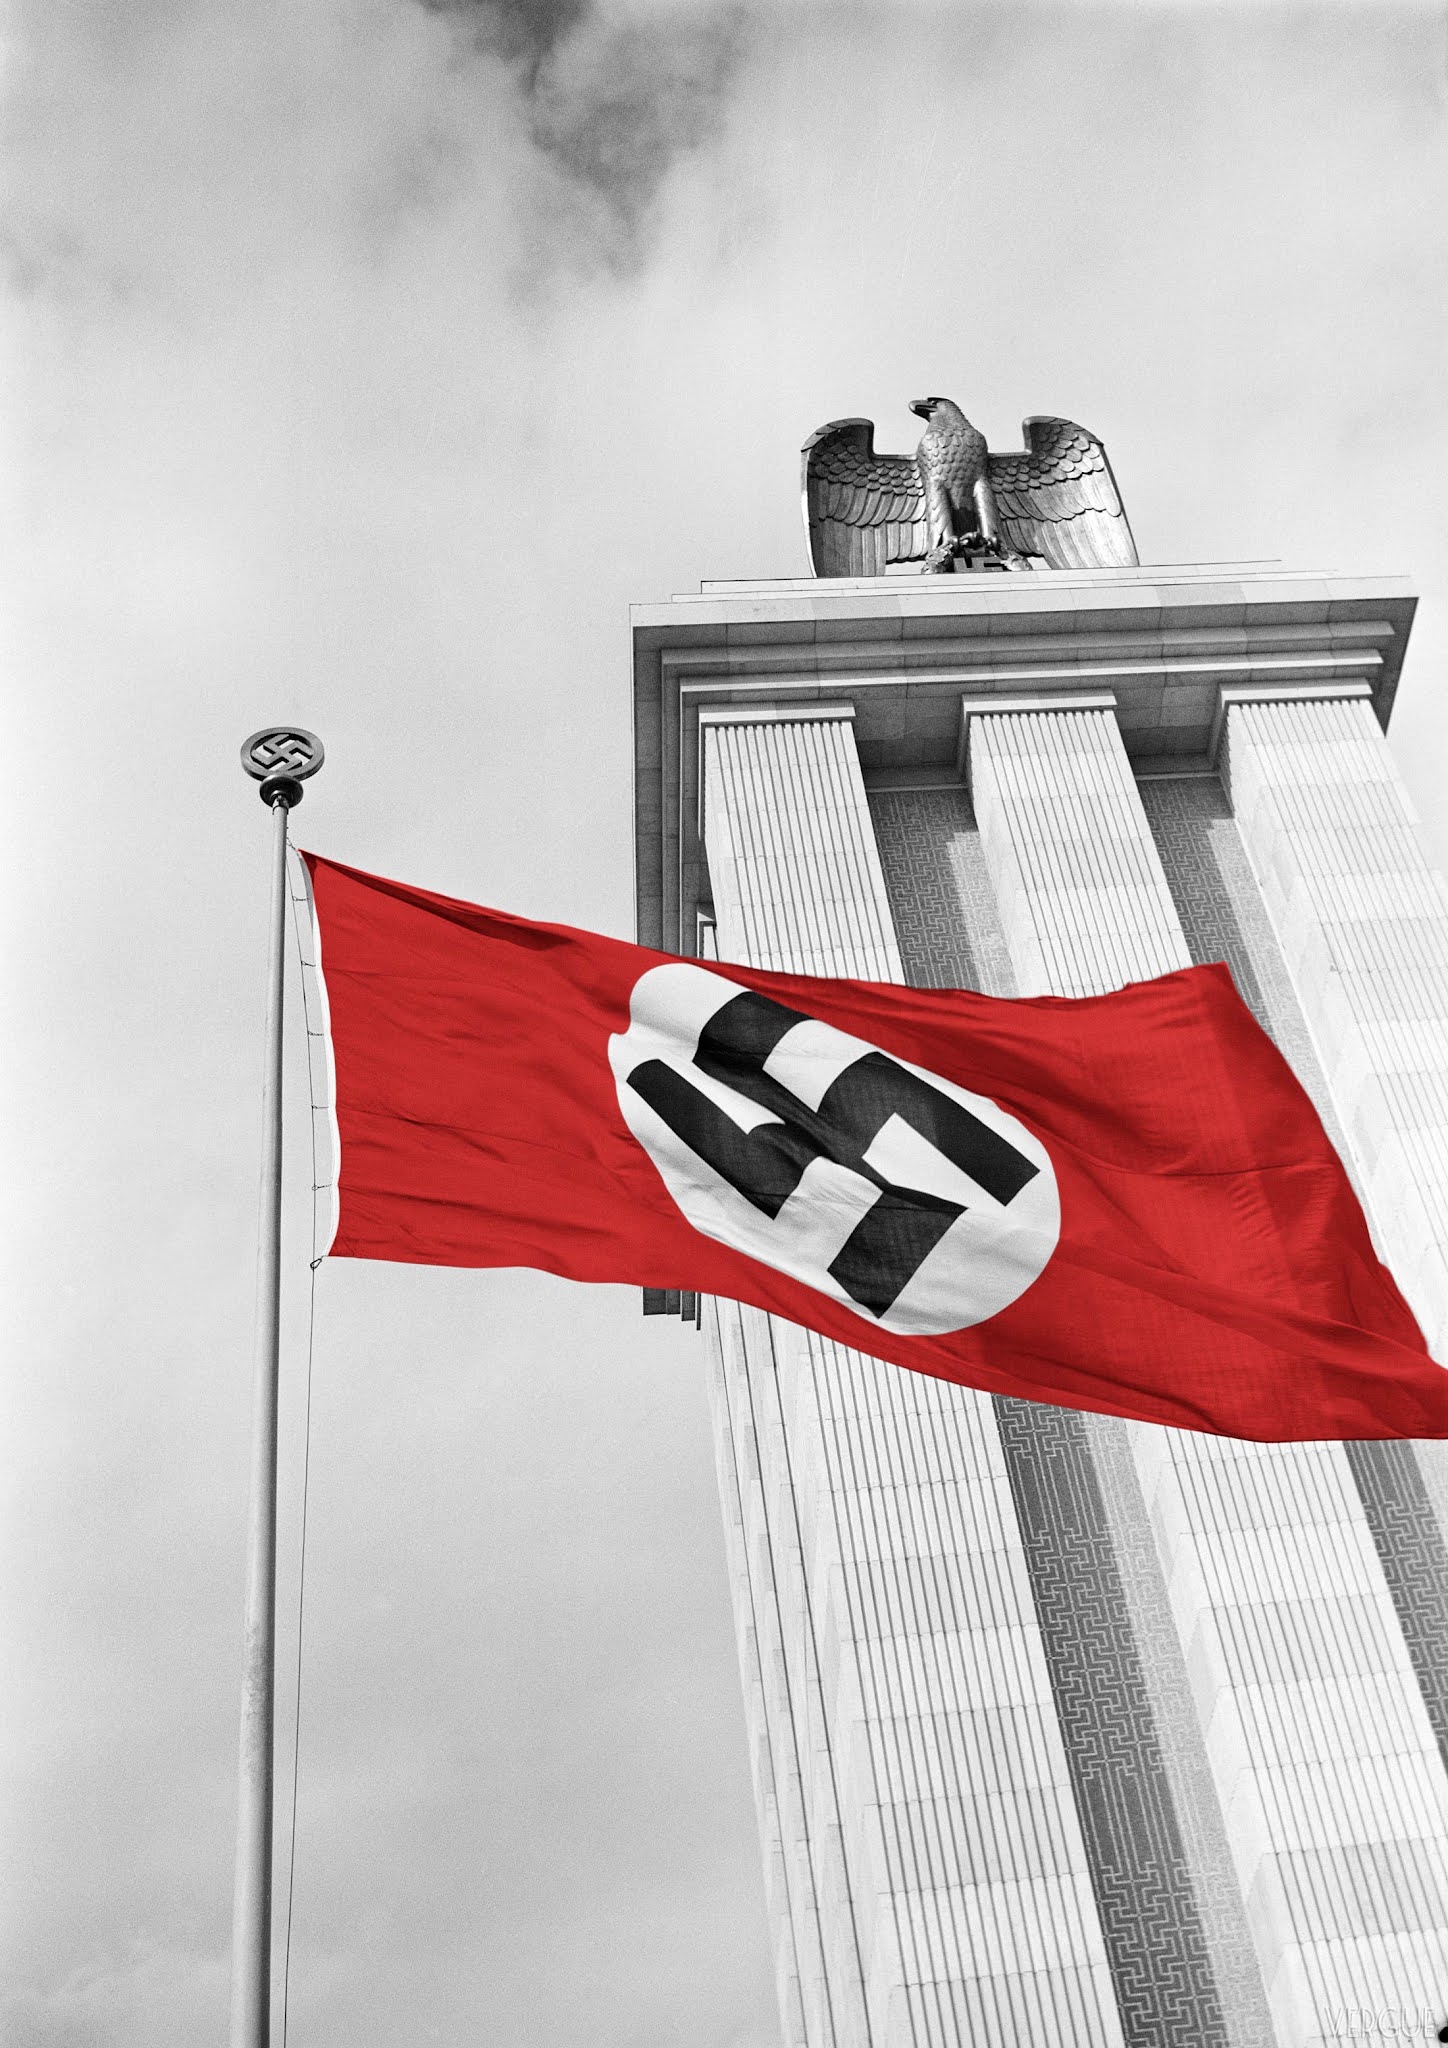 1 национал. Nazi Architecture.